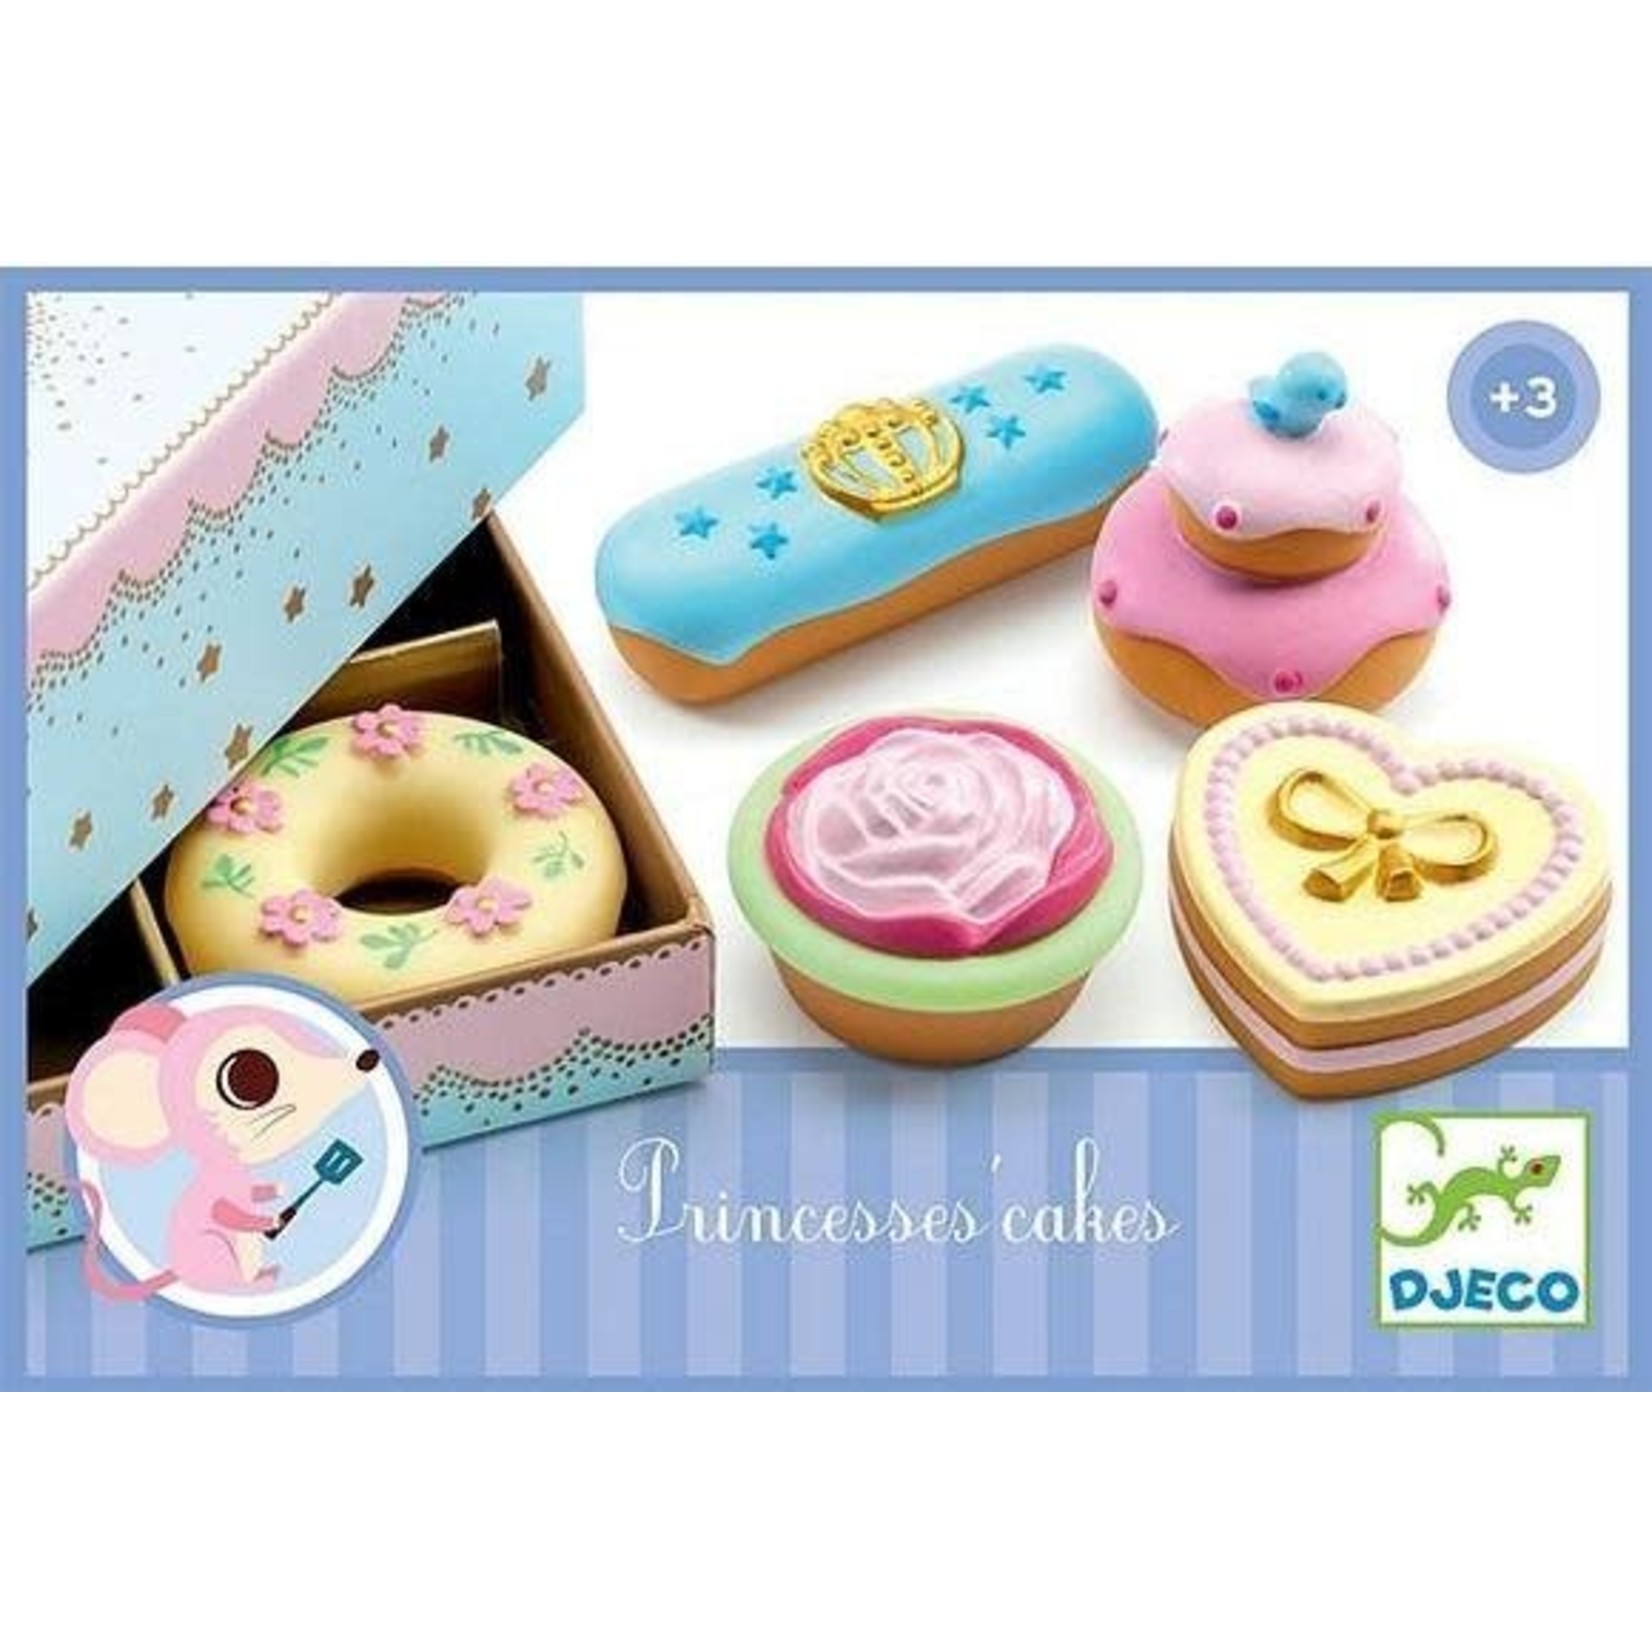 Djeco DJECO - 'Princess' Cakes' Set